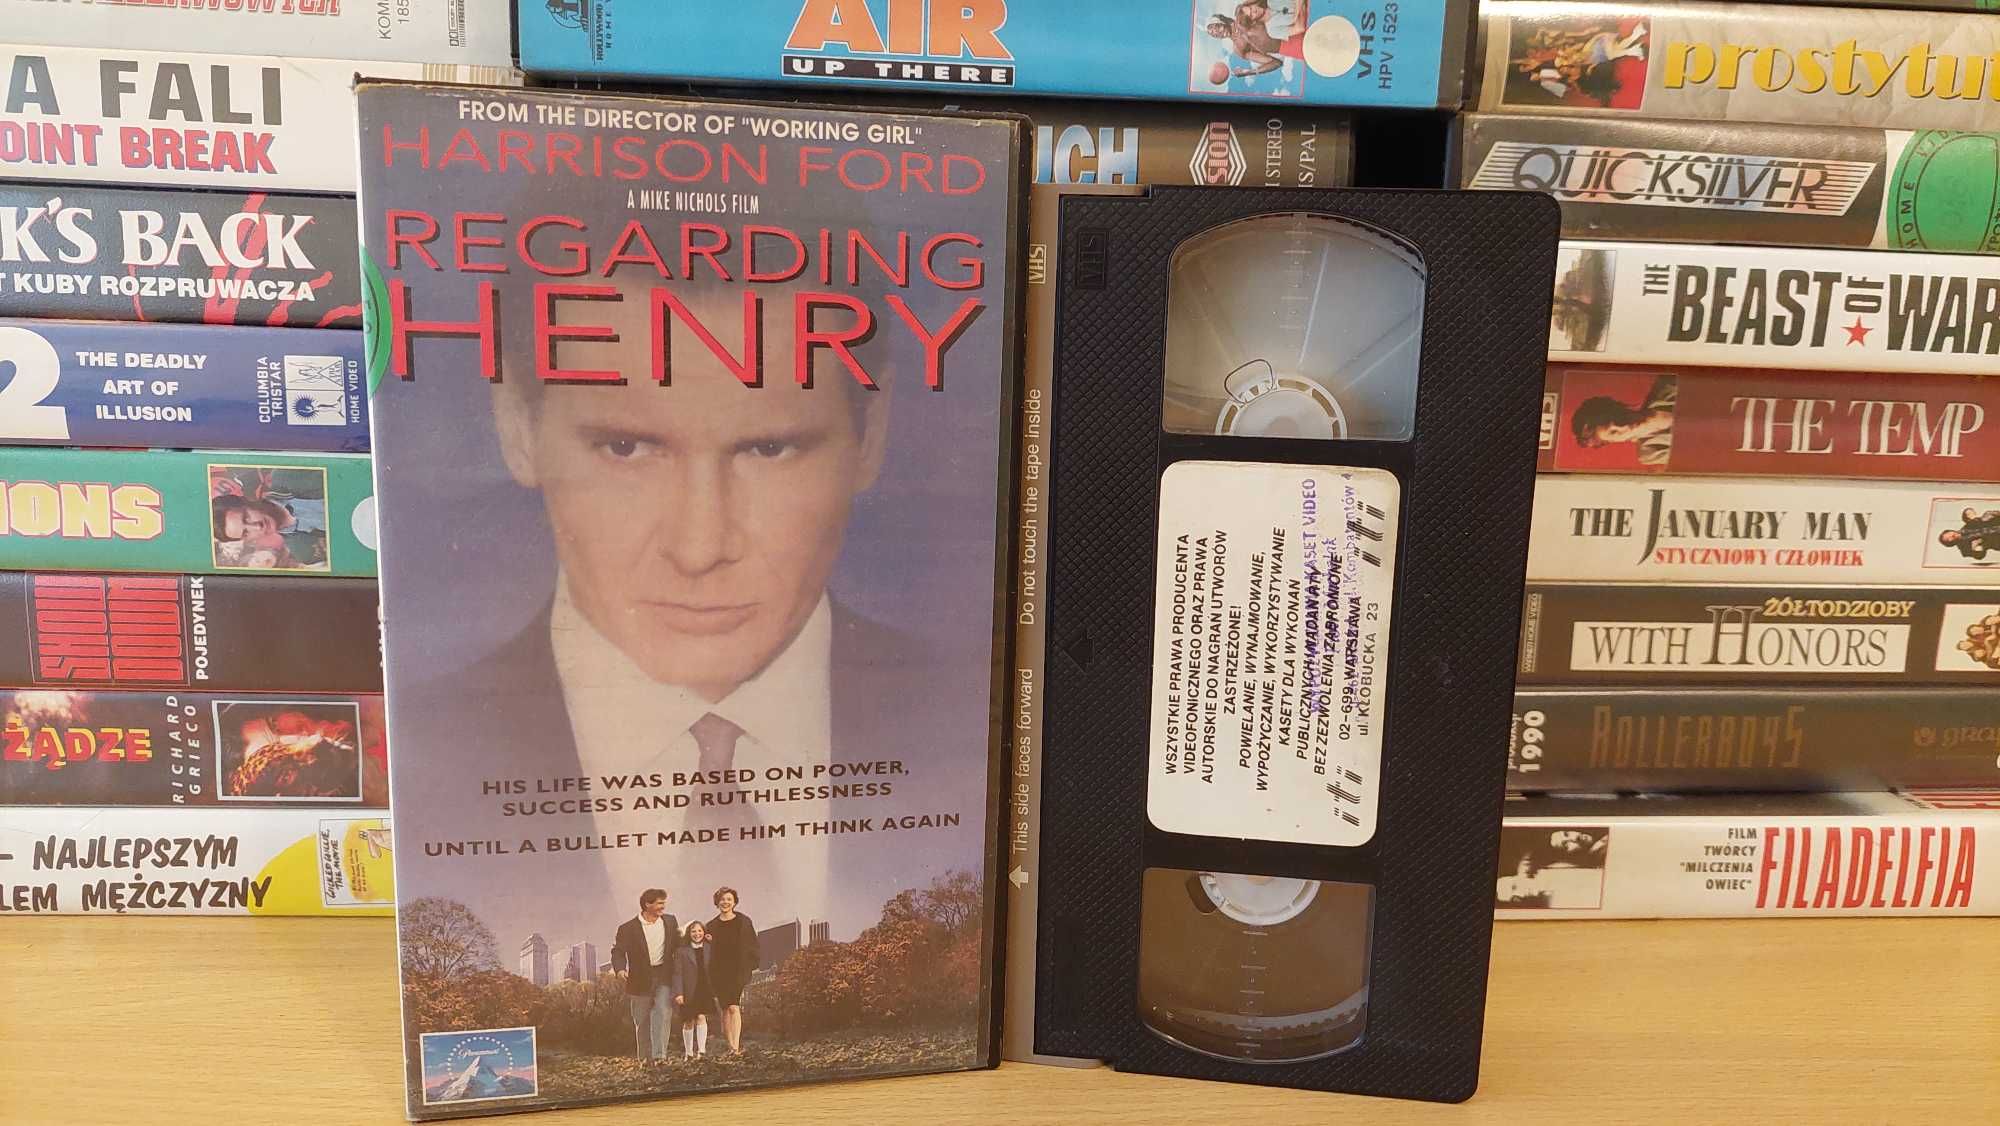 Odnaleźć Siebie - (Regarding Henry) - VHS